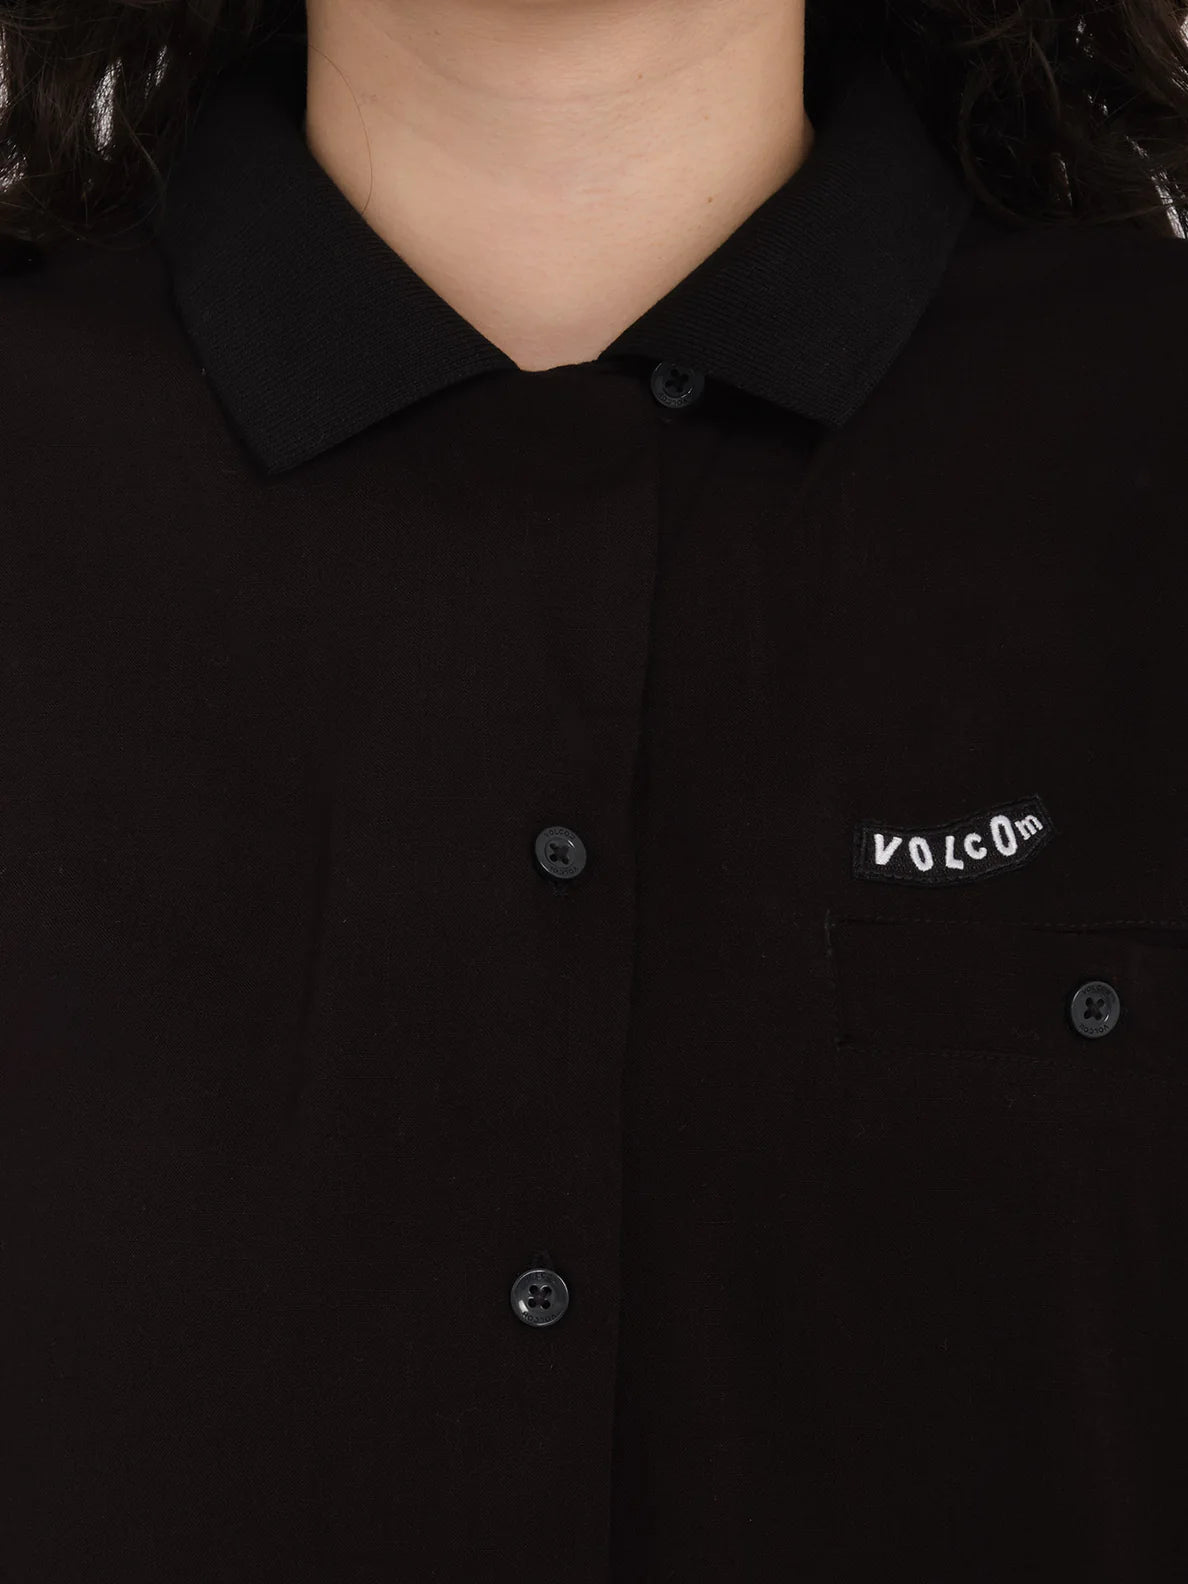 Servistone hemd black - Volcom